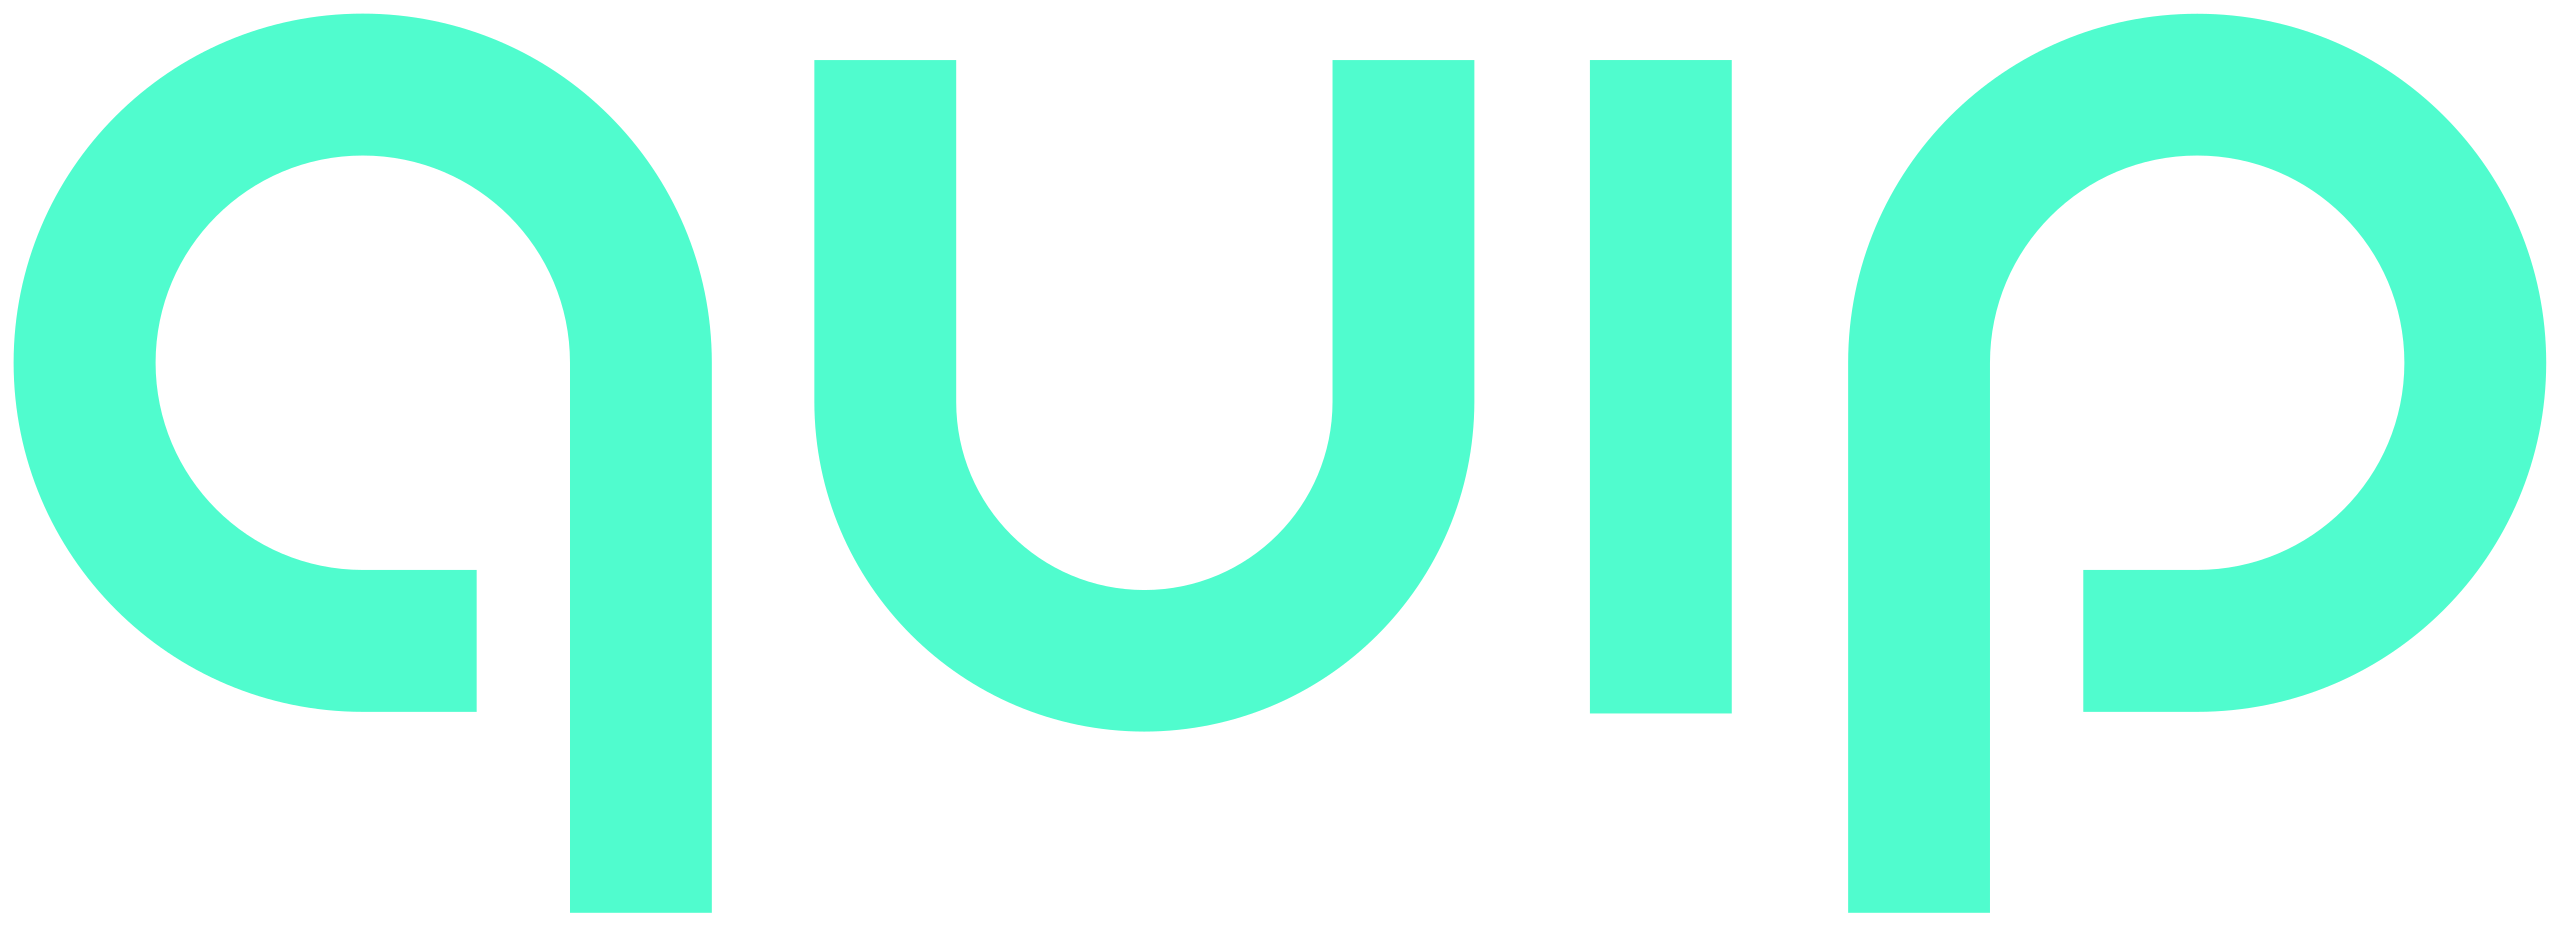 Quip logo.svg